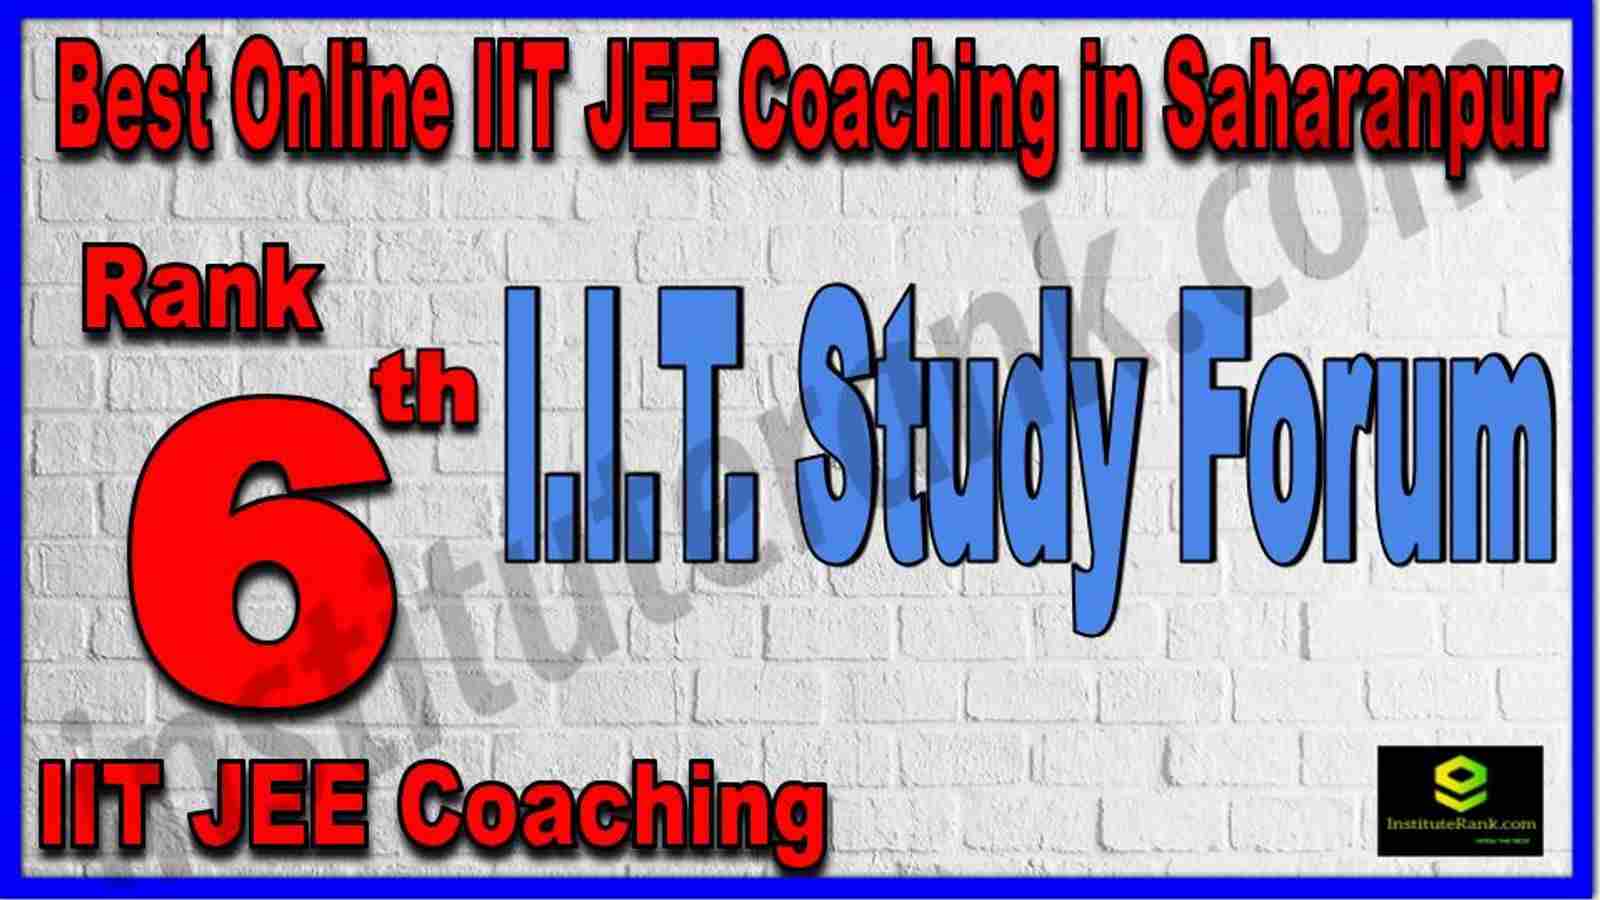 Rank 6th Best Online IIT JEE Coaching in Saharanpur